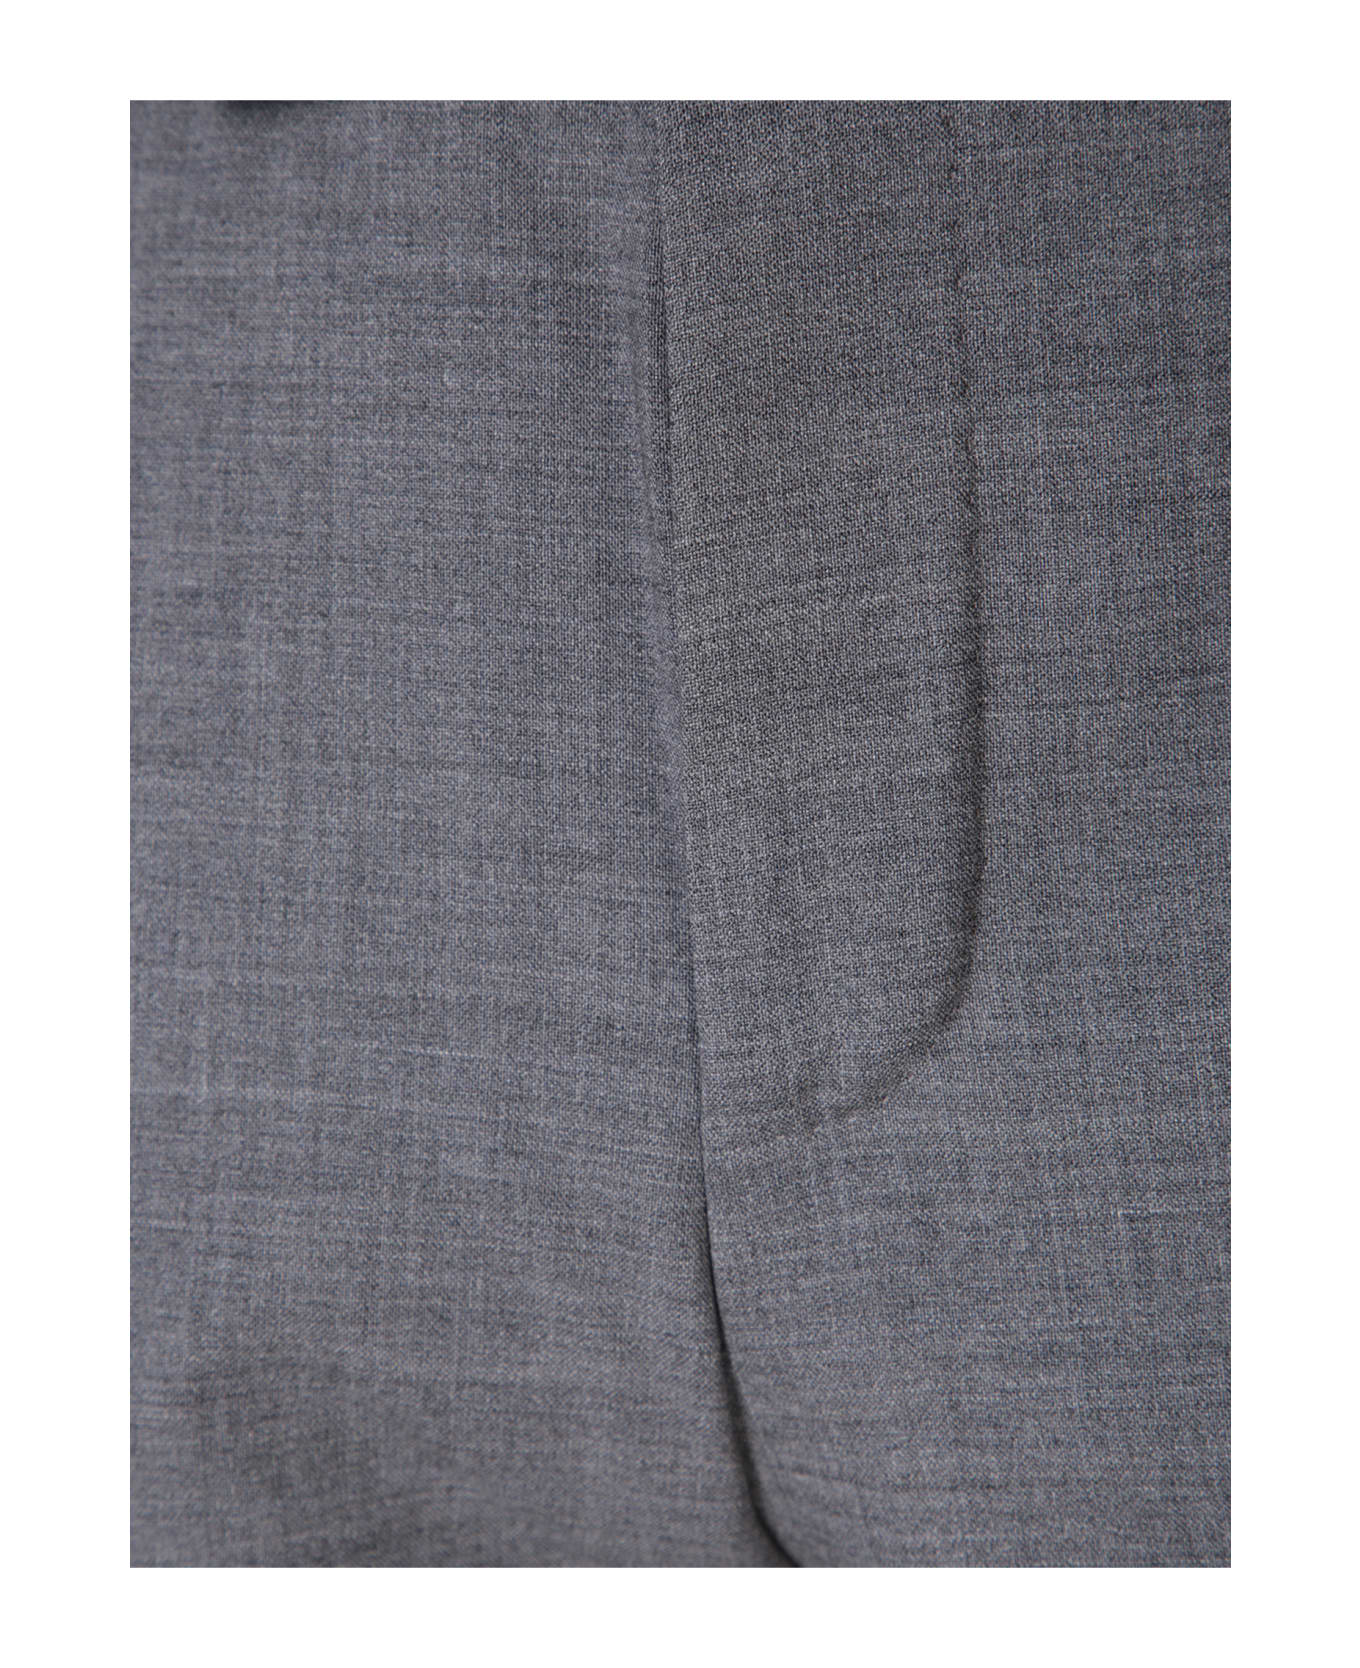 PT Torino Dieci Grey Trousers - Grey